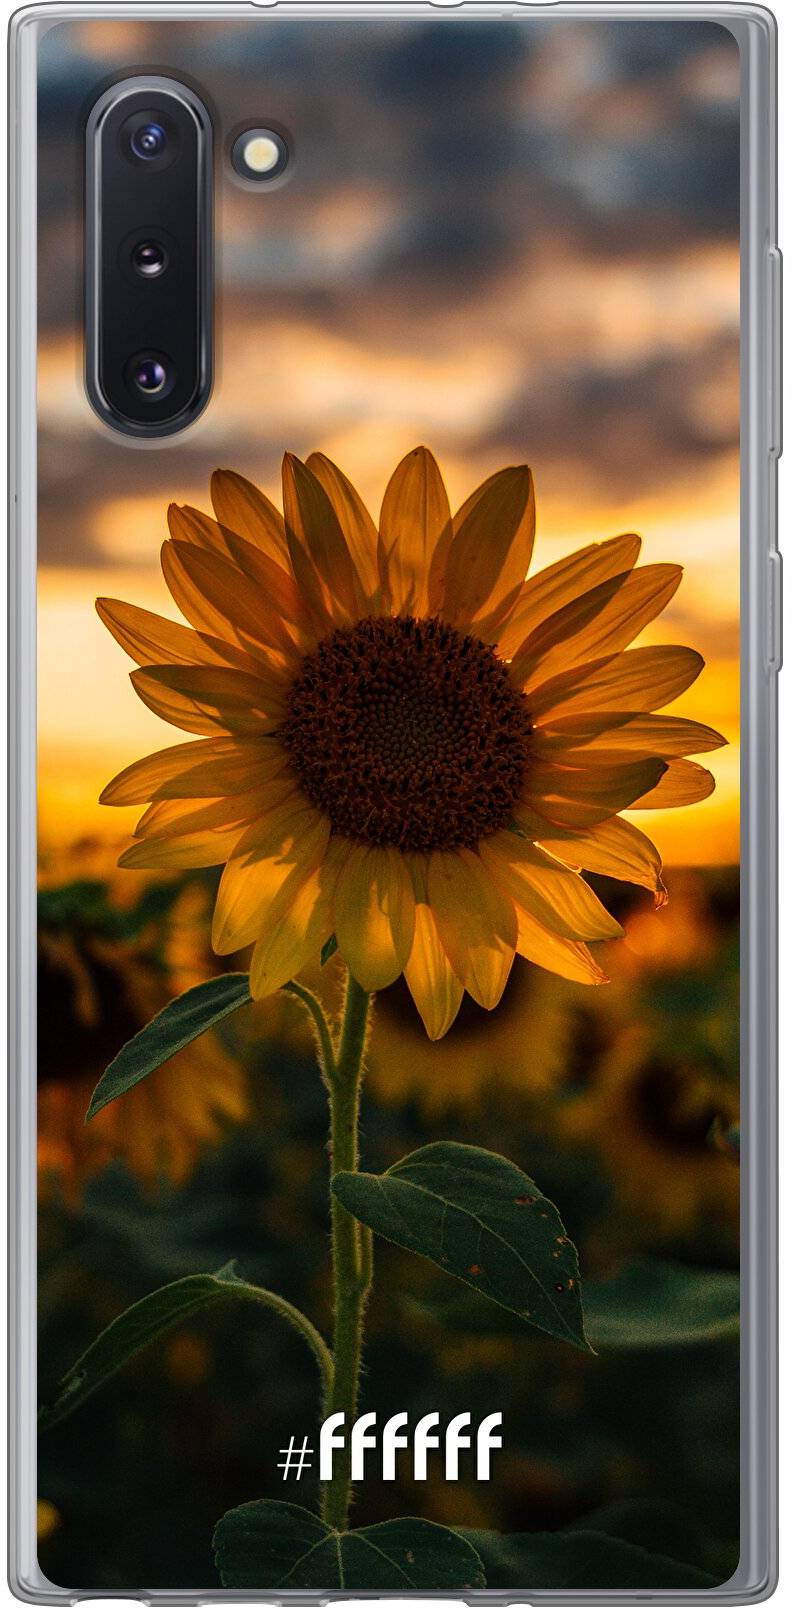 Sunset Sunflower Galaxy Note 10